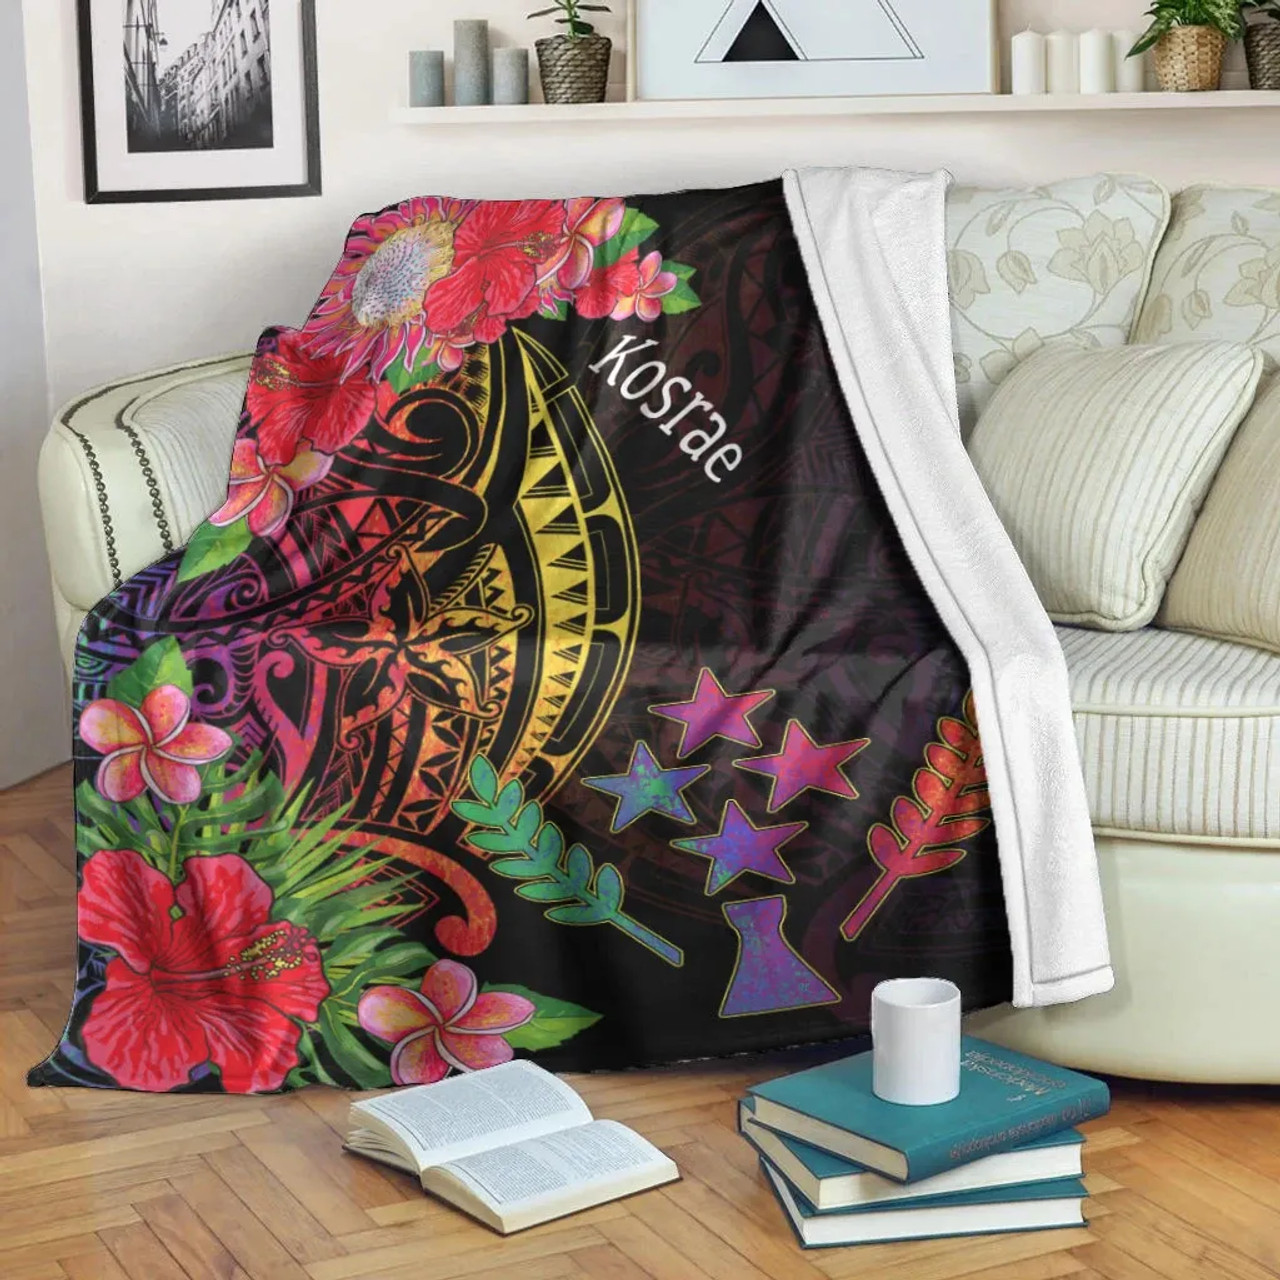 Kosrae State Premium Blanket - Tropical Hippie Style 1